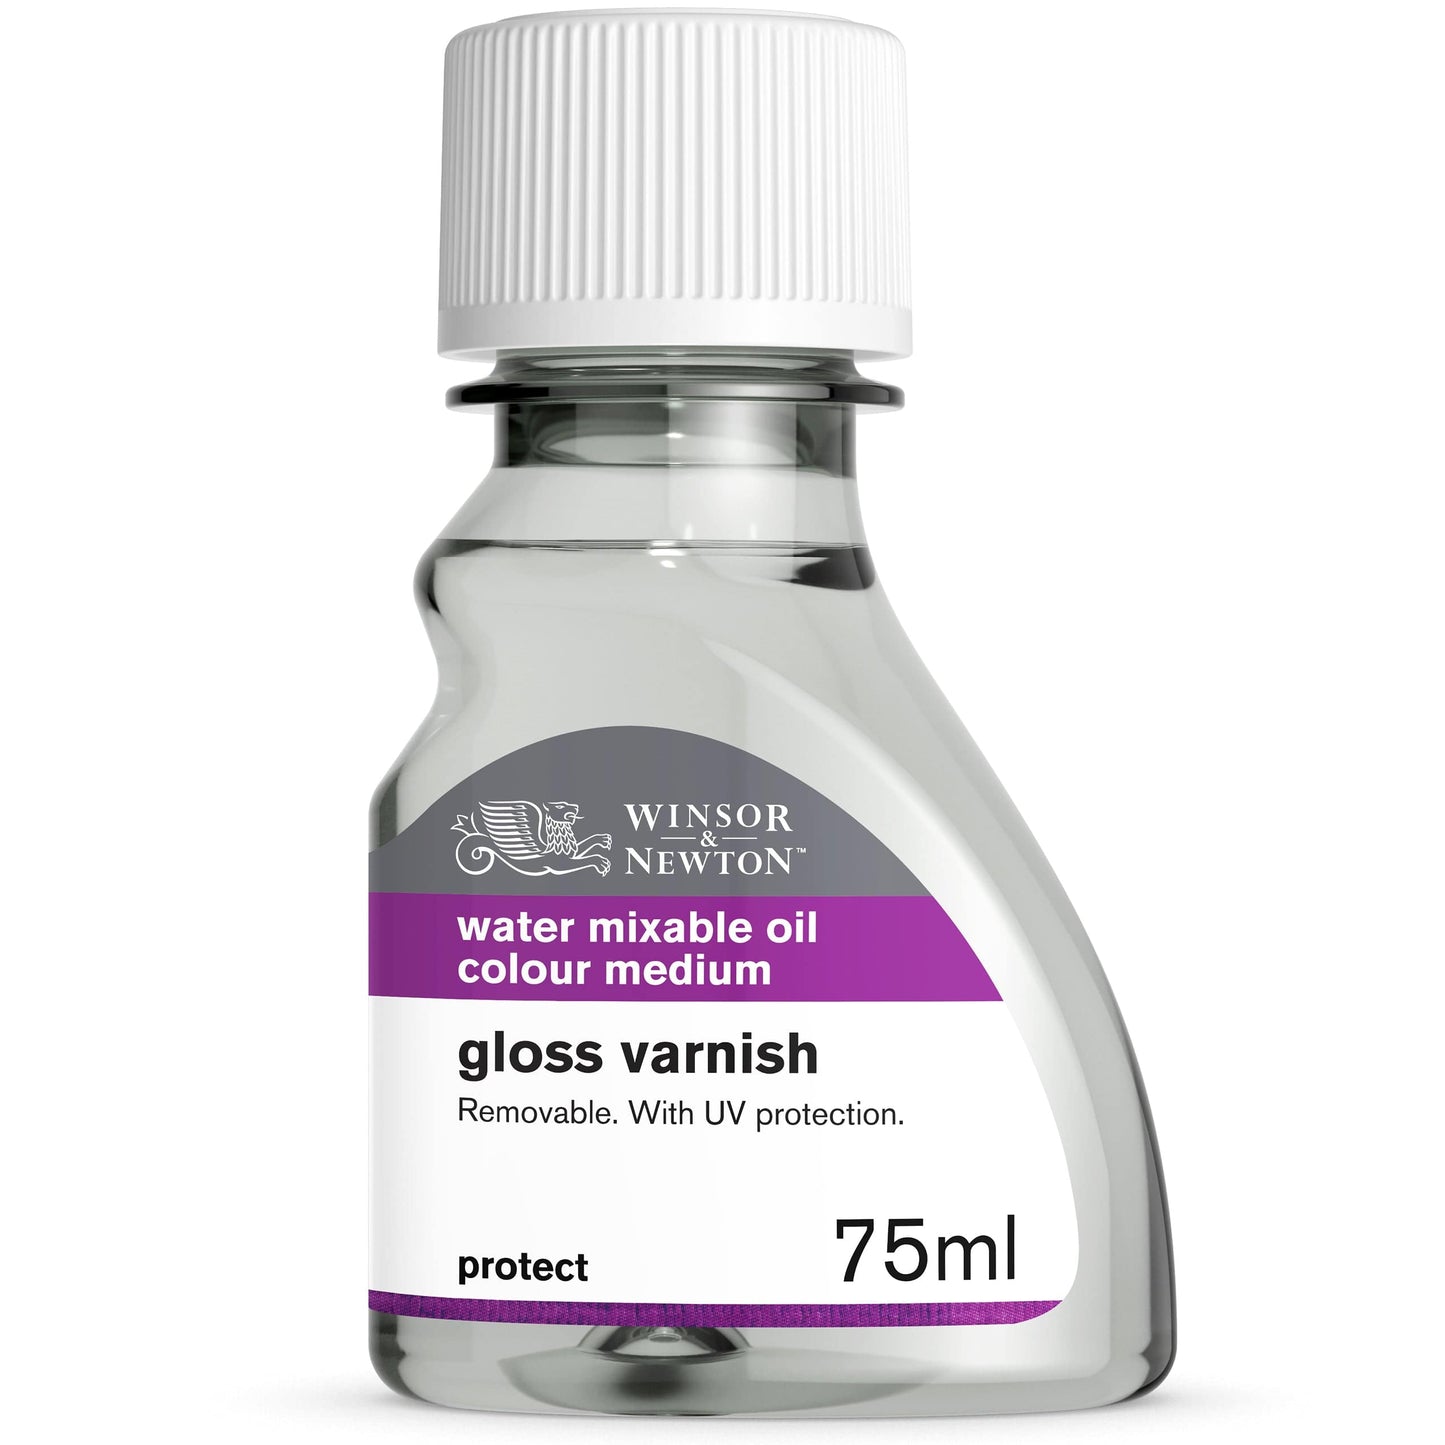 Winsor & Newton Water Mixable Oil Medium Winsor & Newton - Artisan - Gloss Varnish - 75mL Bottle - Item #3221721